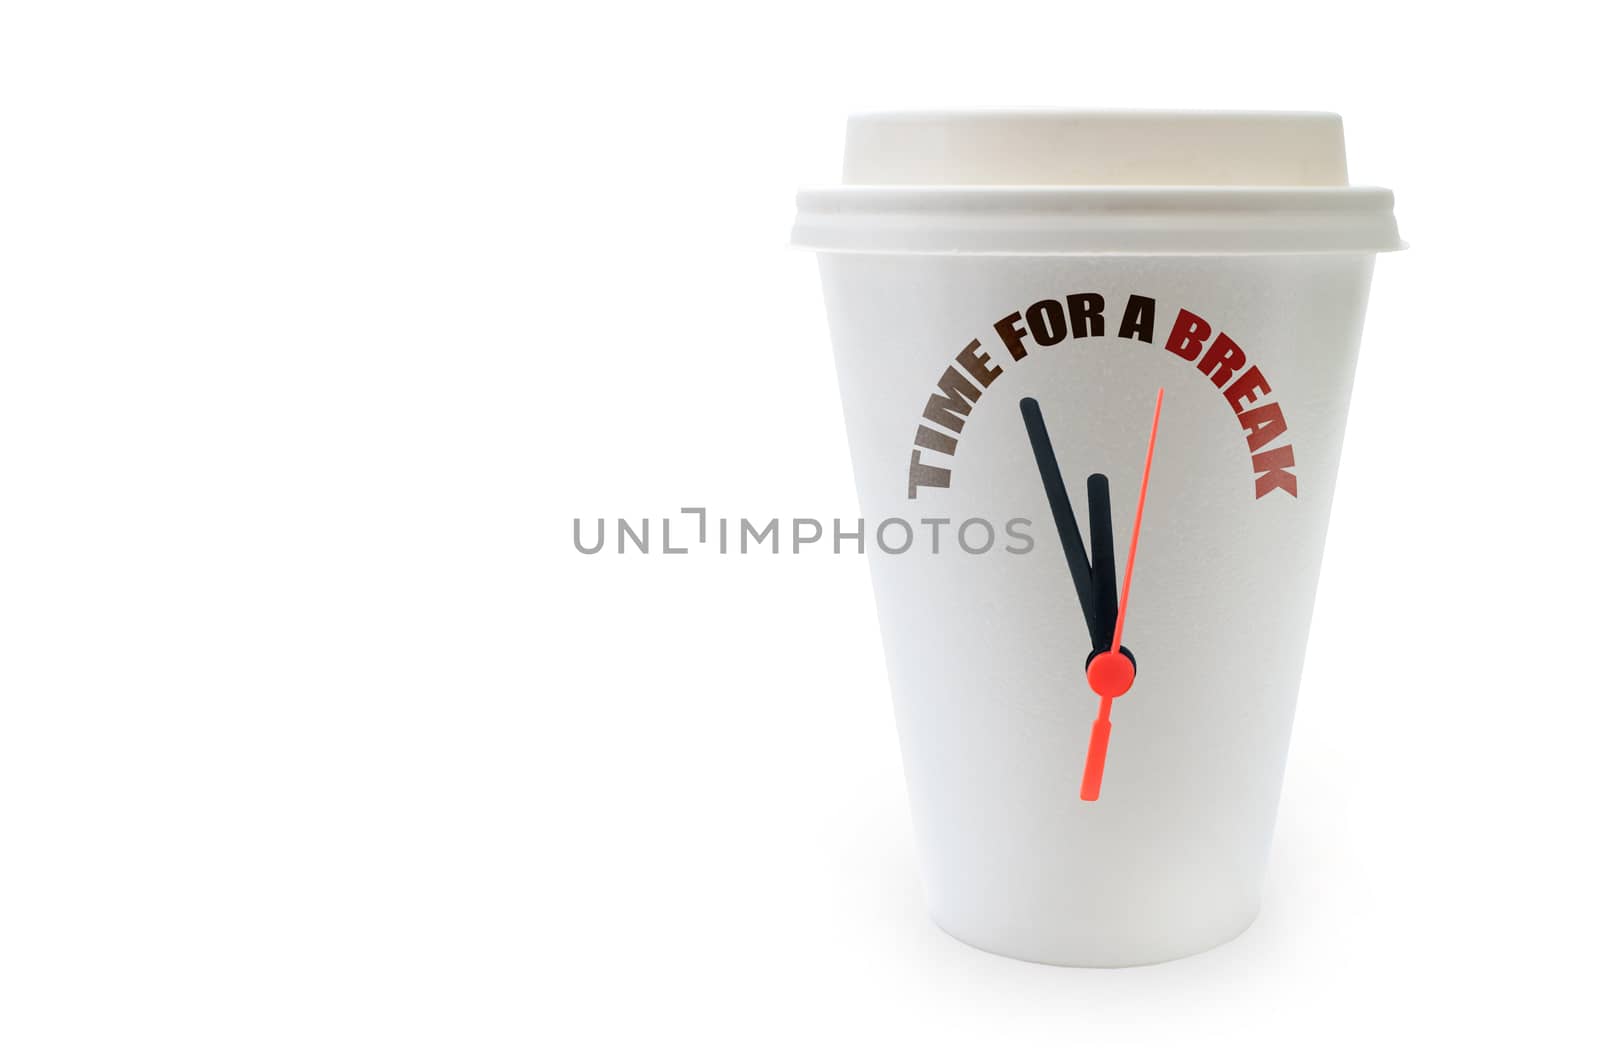 Time for a coffee break by unikpix